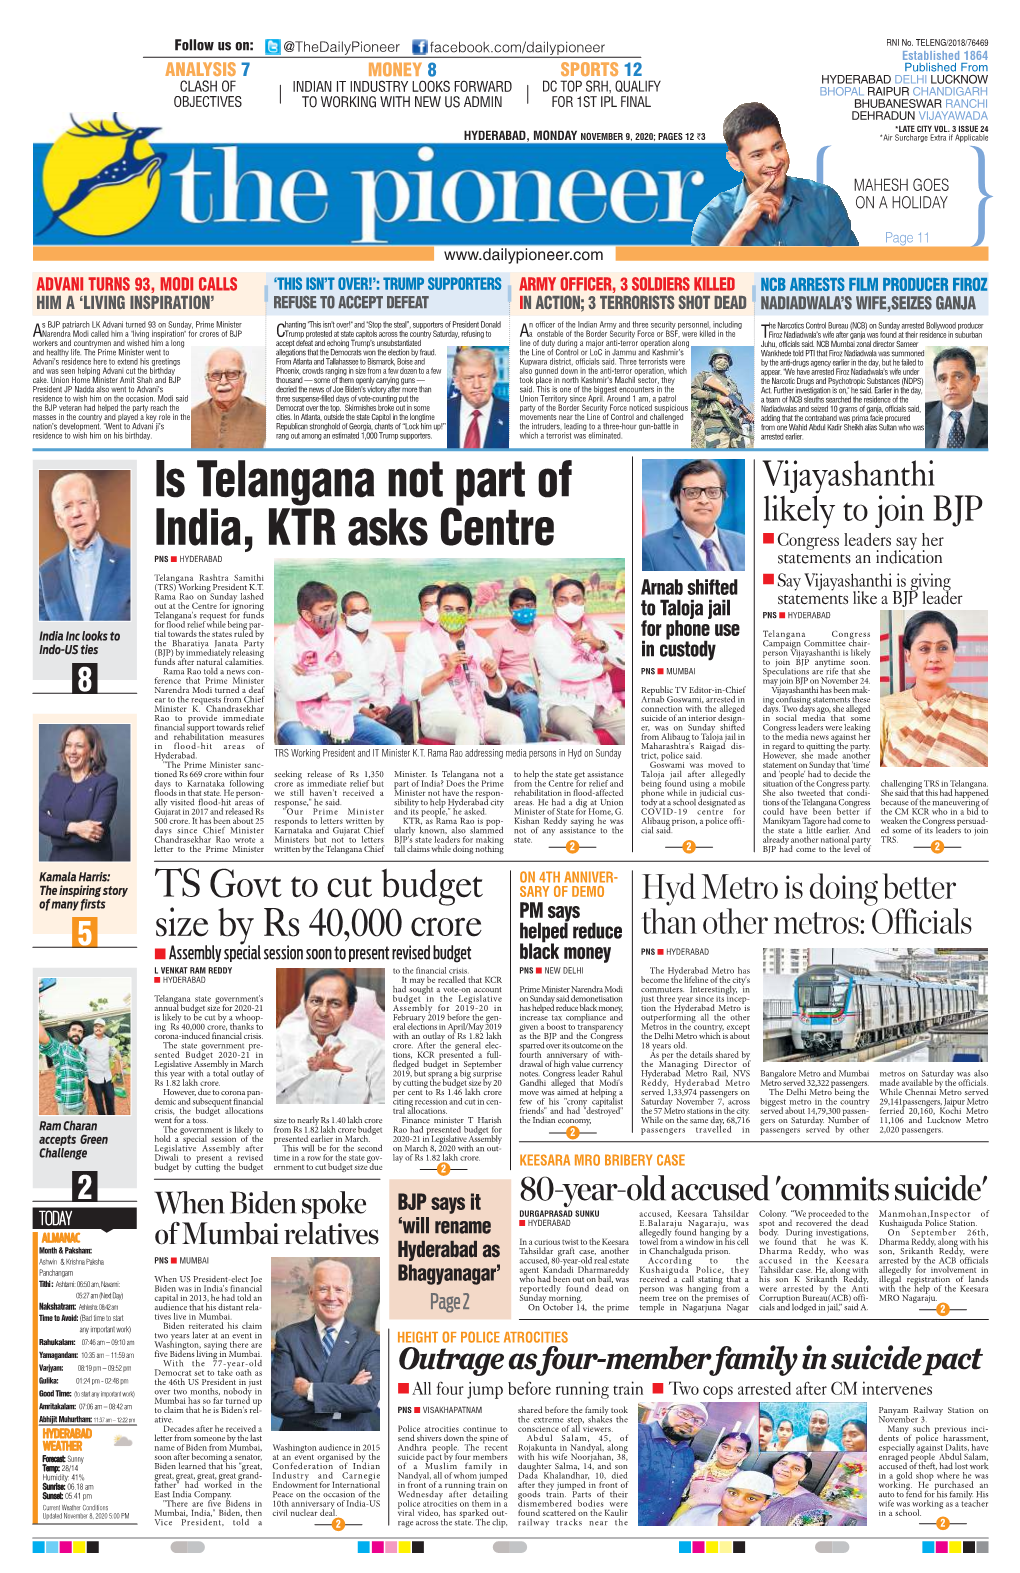 Is Telangana Not Part of India, KTR Asks Centre